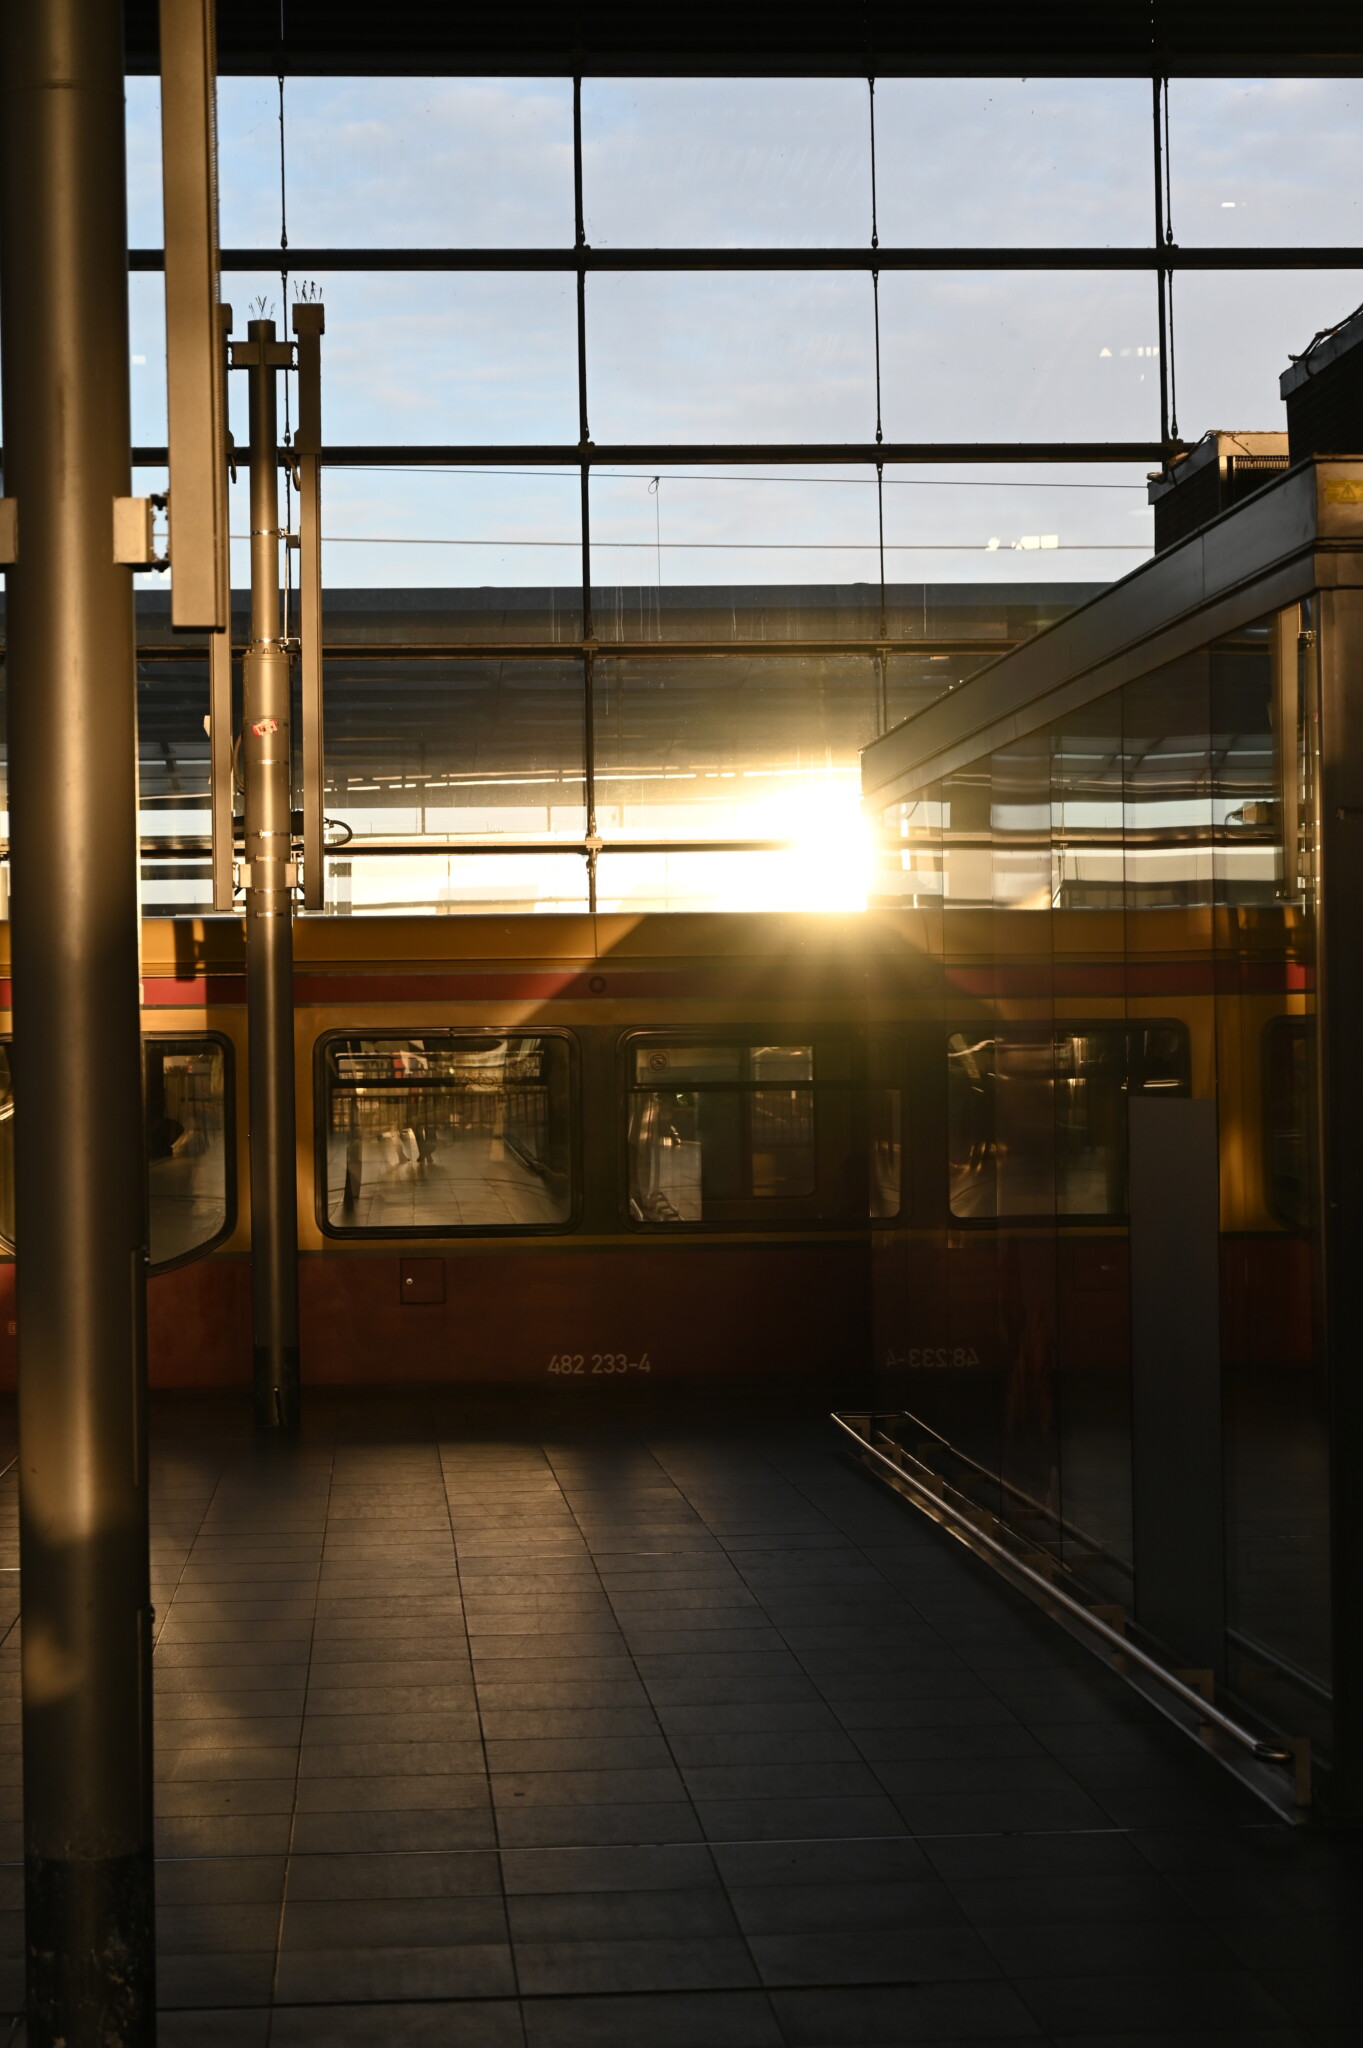 Ringbahn in Berlin